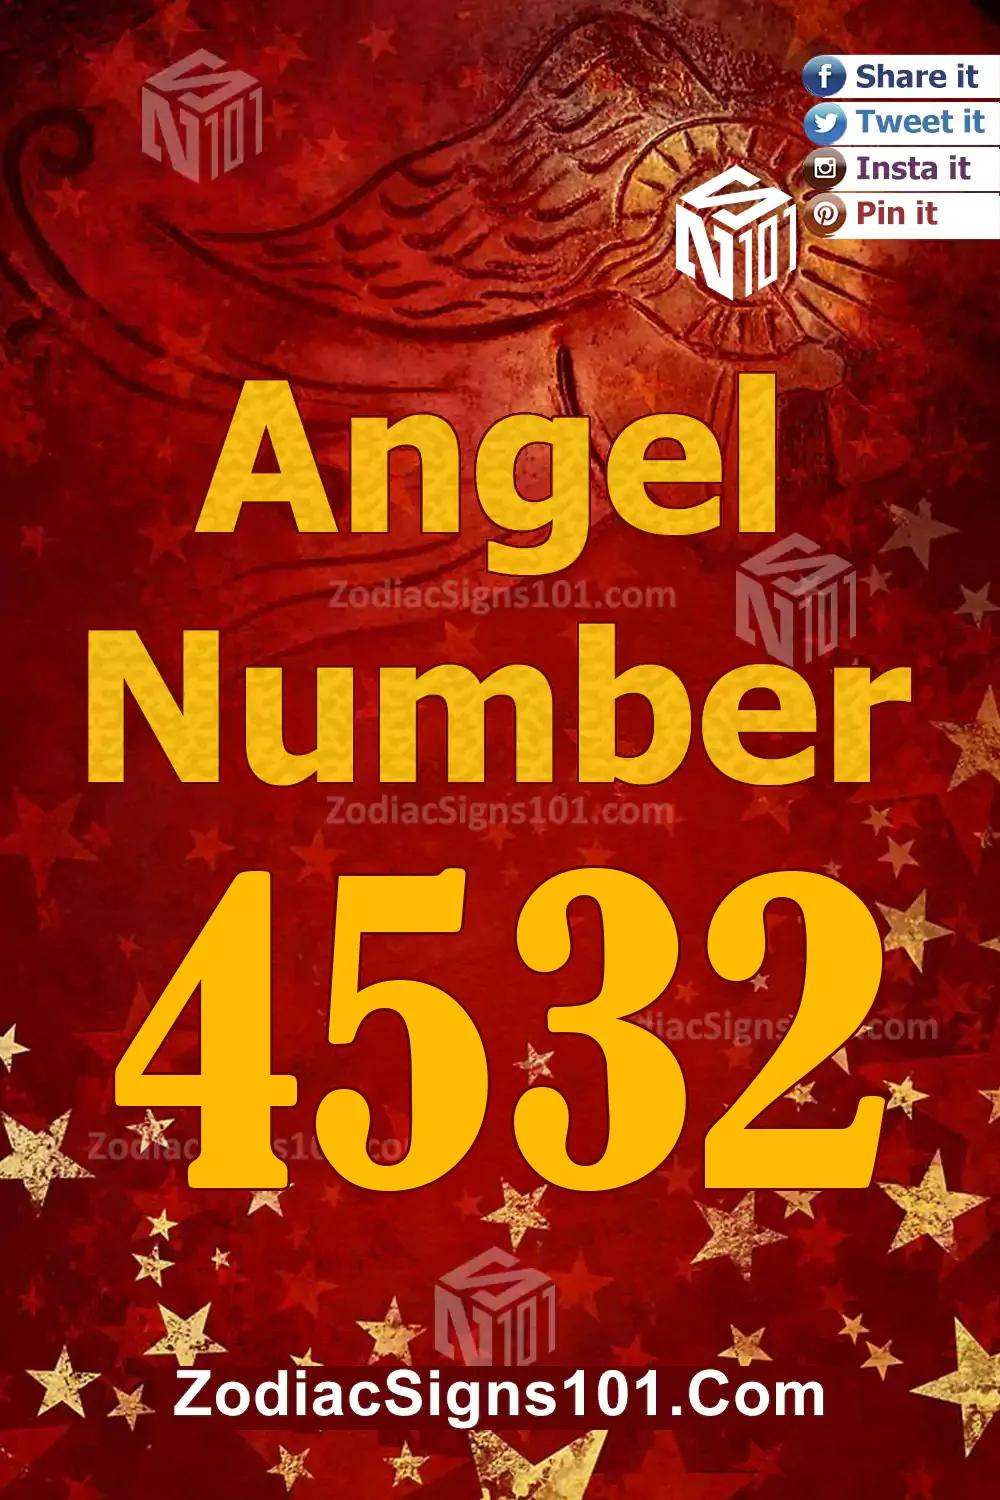 4532-Angel-Number-Meaning.jpg